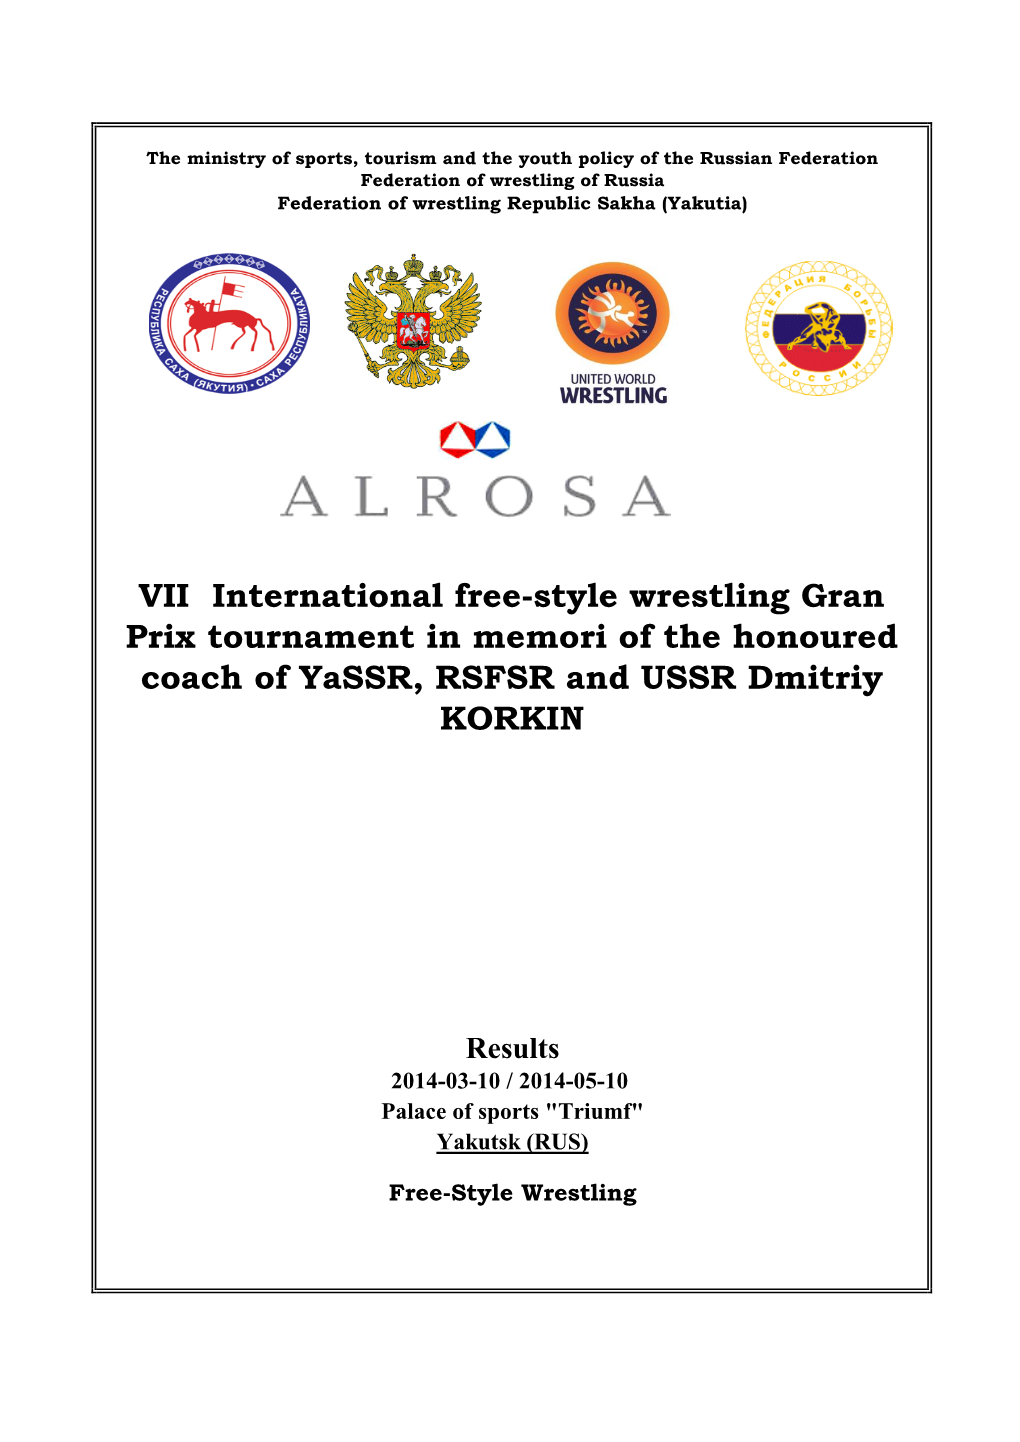 VII International Free-Style Wrestling Gran Prix Tournament in Memori of the Honoured Coach of Yassr, RSFSR and USSR Dmitriy KORKIN